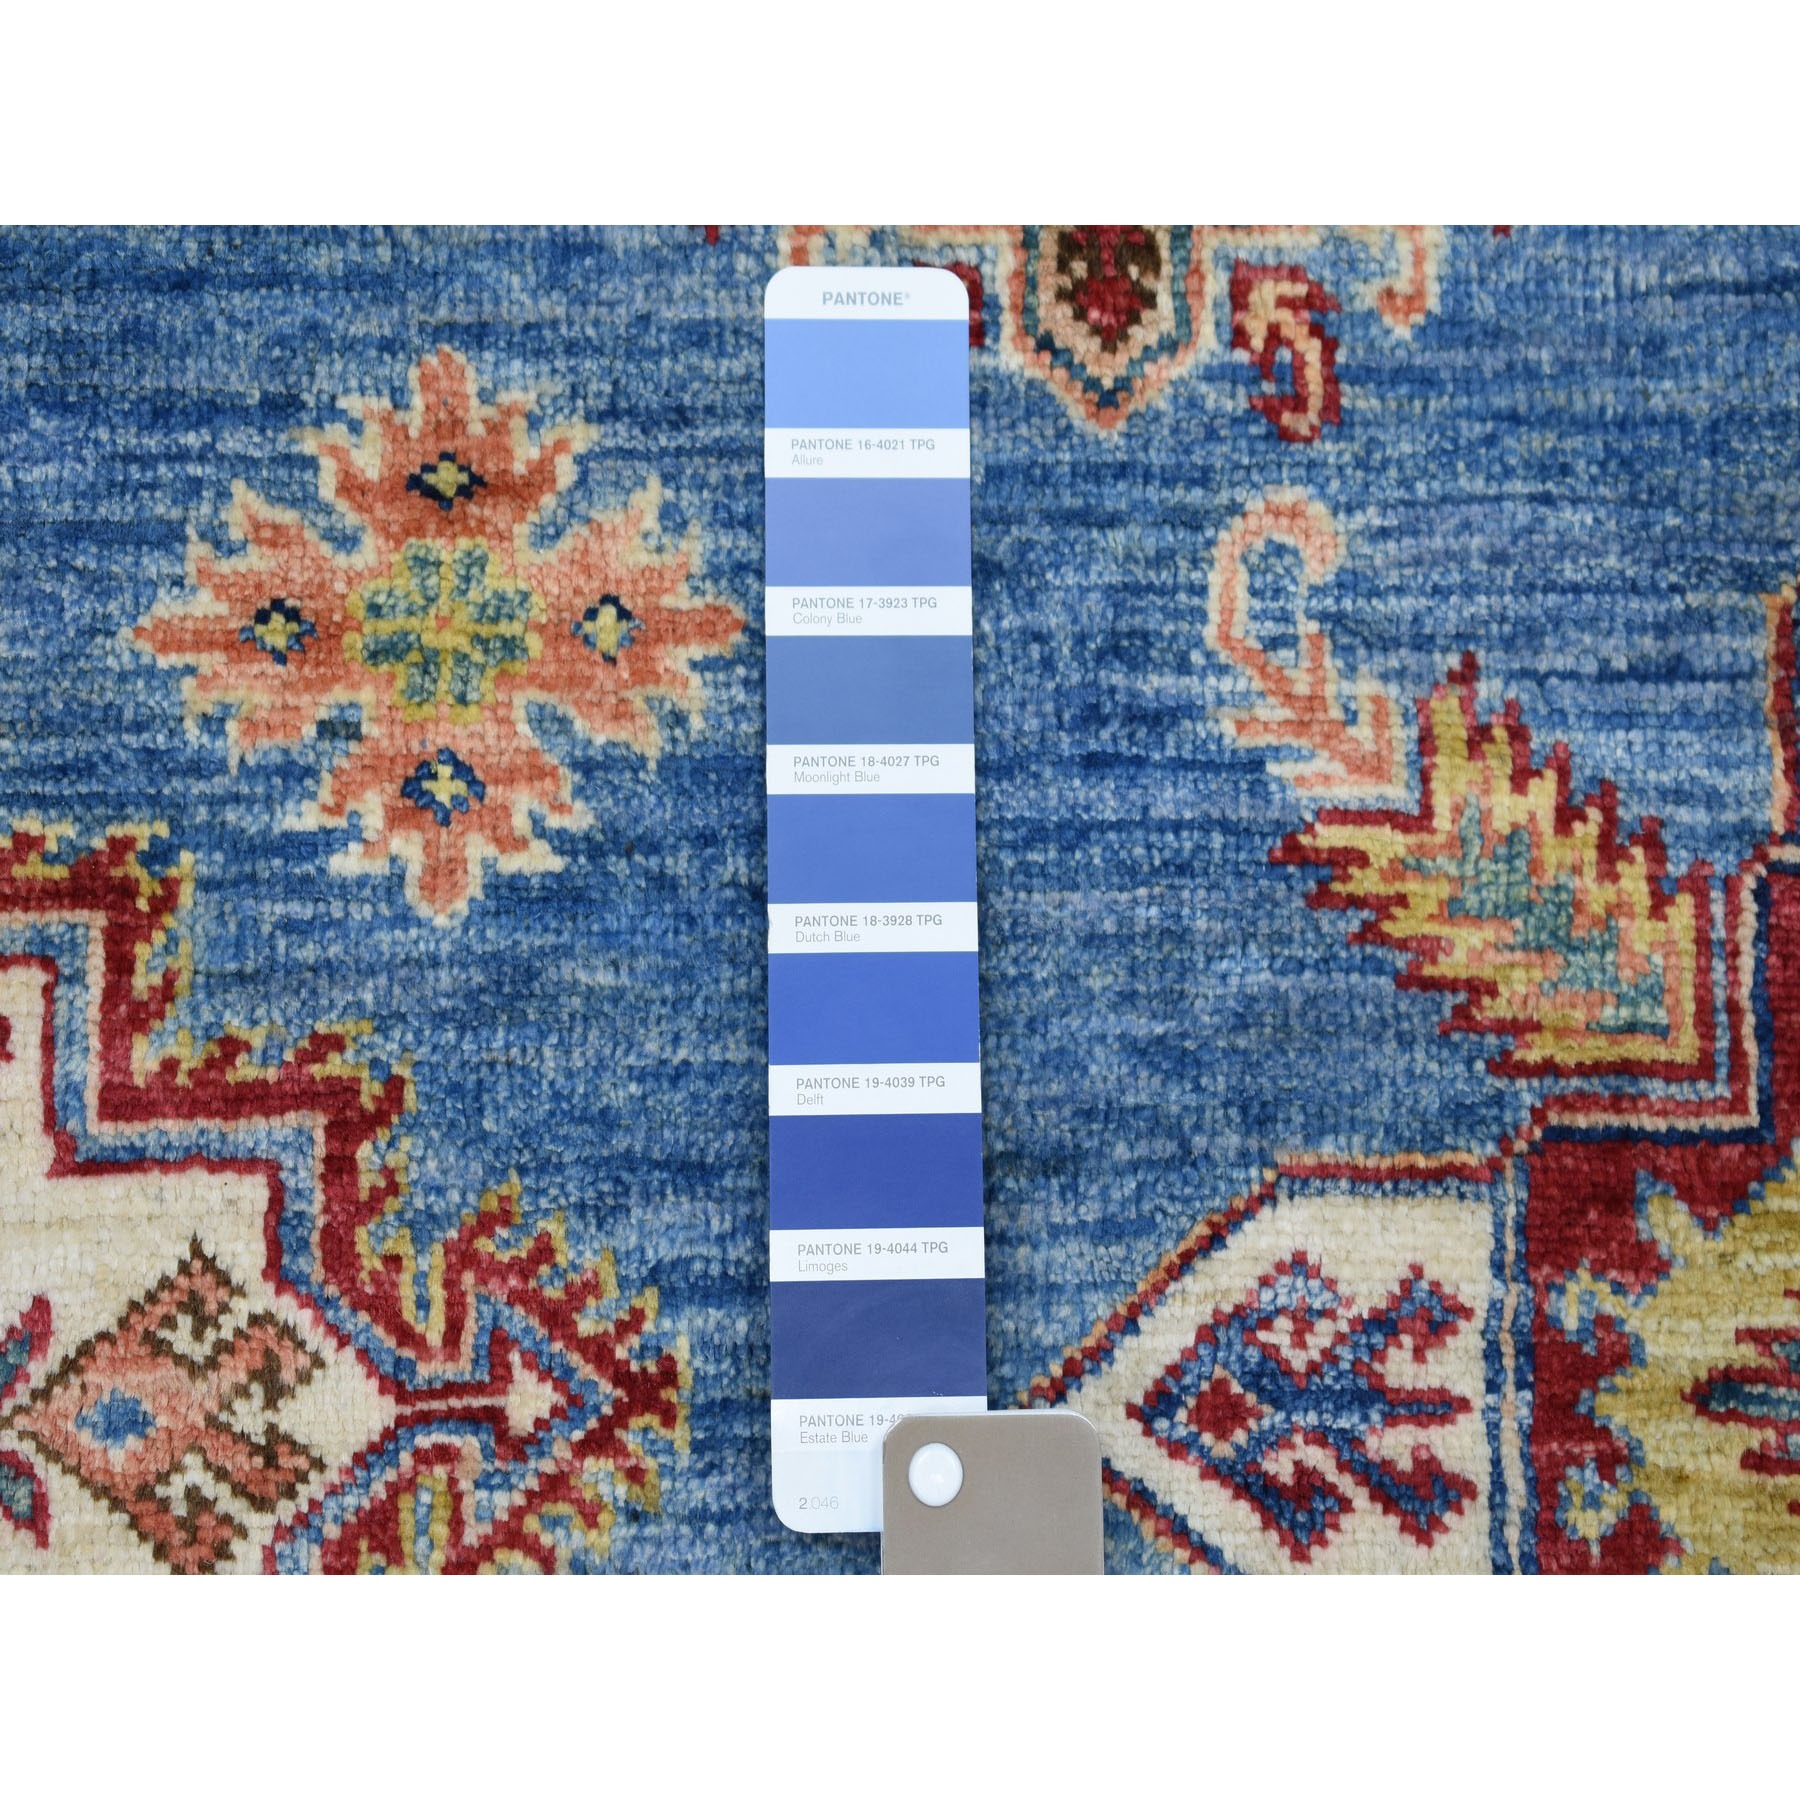 8-2 x9-9  Blue Super Kazak Geometric Design Pure Wool Hand-Knotted Oriental Rug 